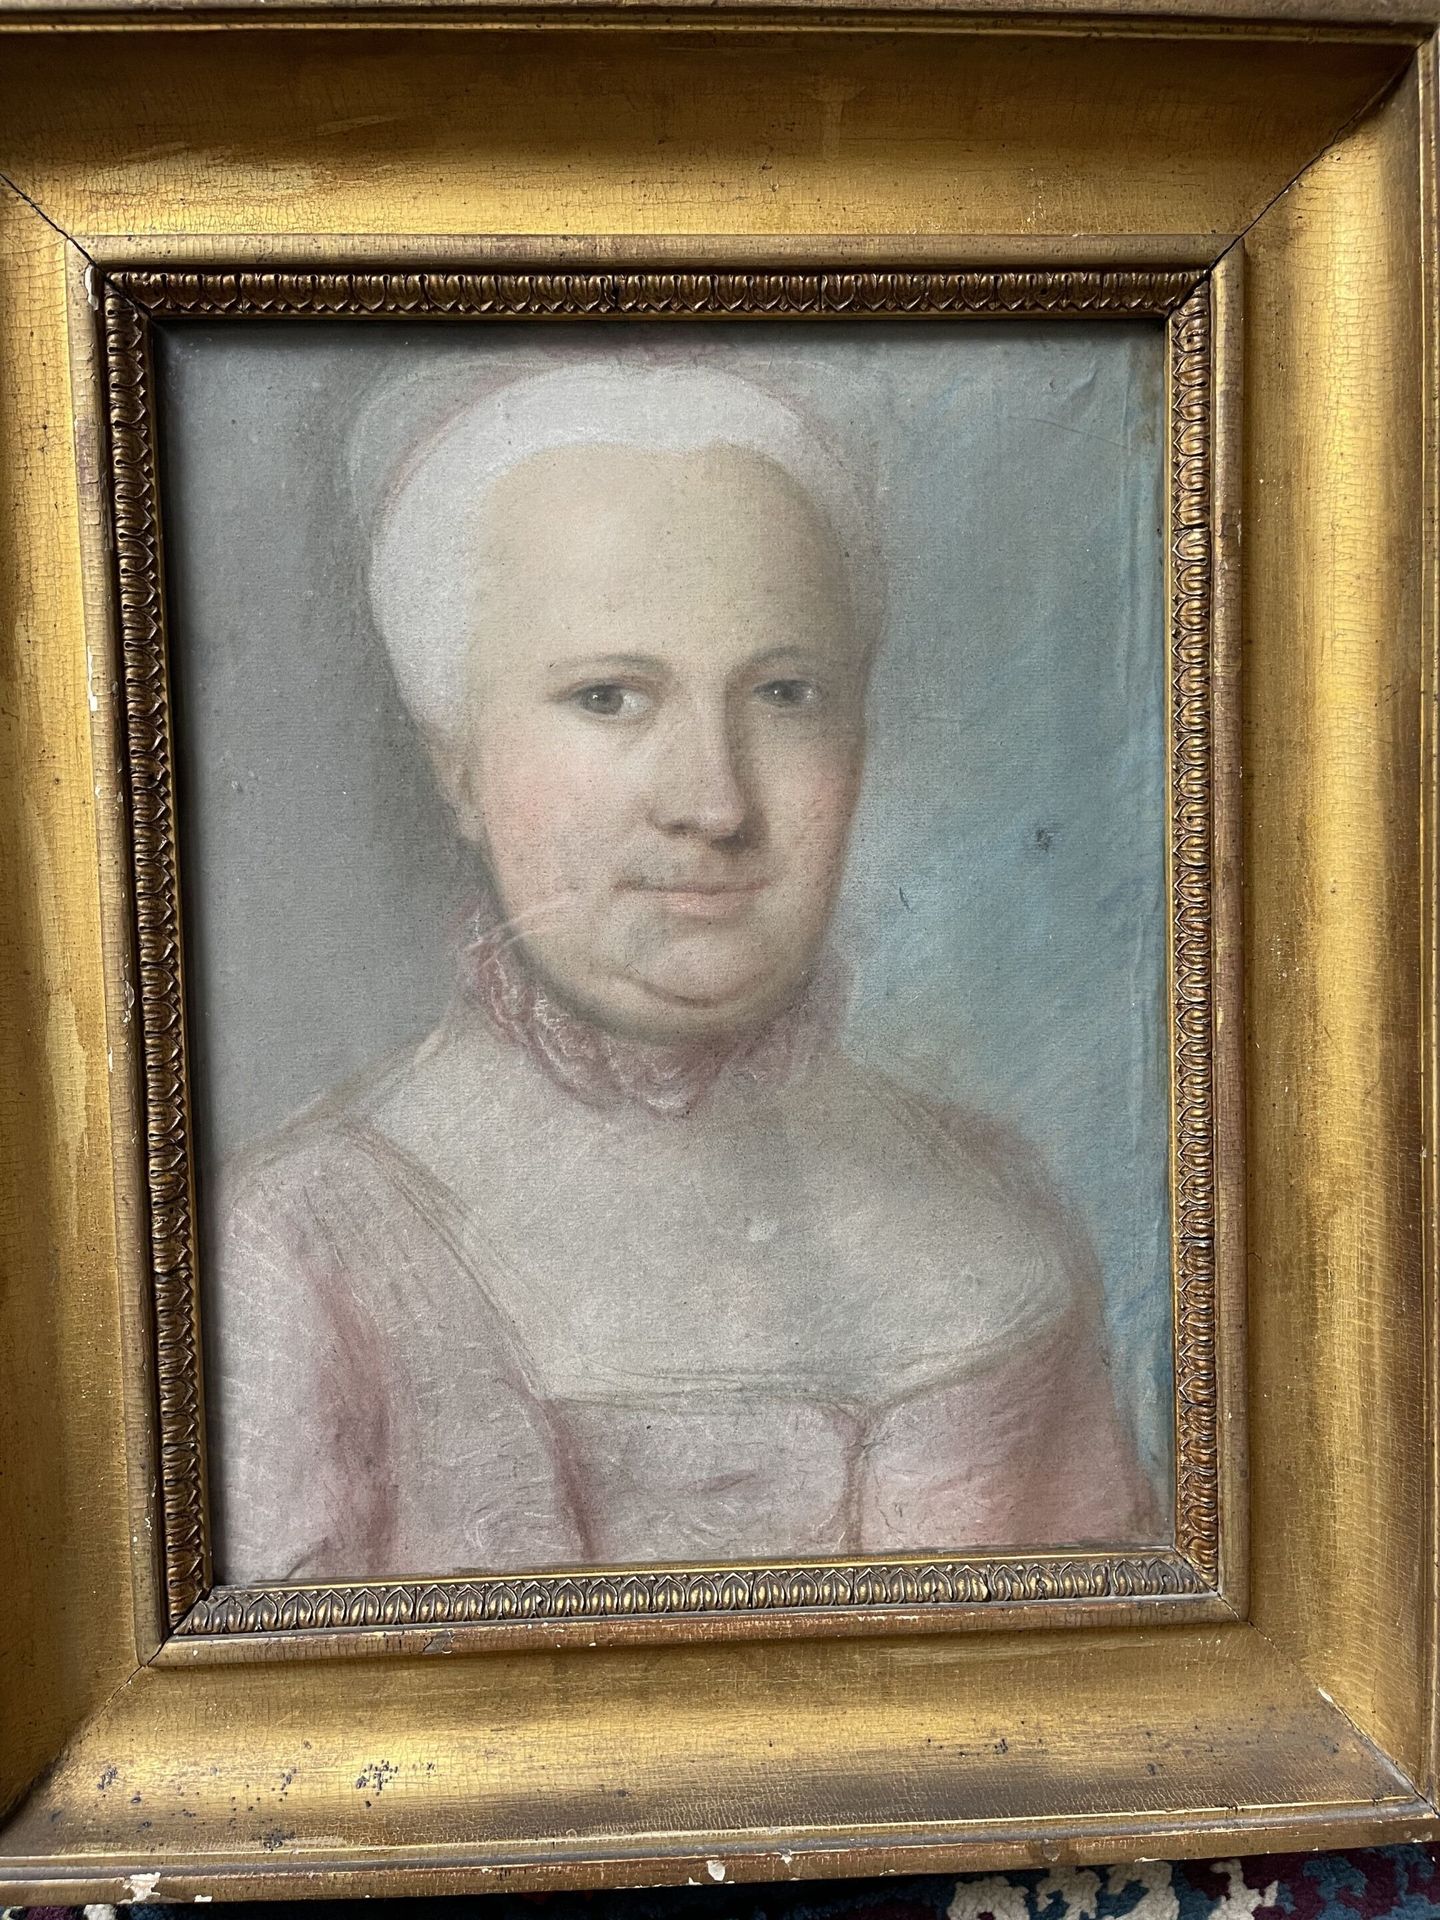 Null 18世纪末的法国学校
一个男人的肖像和一个女人的肖像
两幅粉彩画
带画框尺寸：54.5 x 46厘米